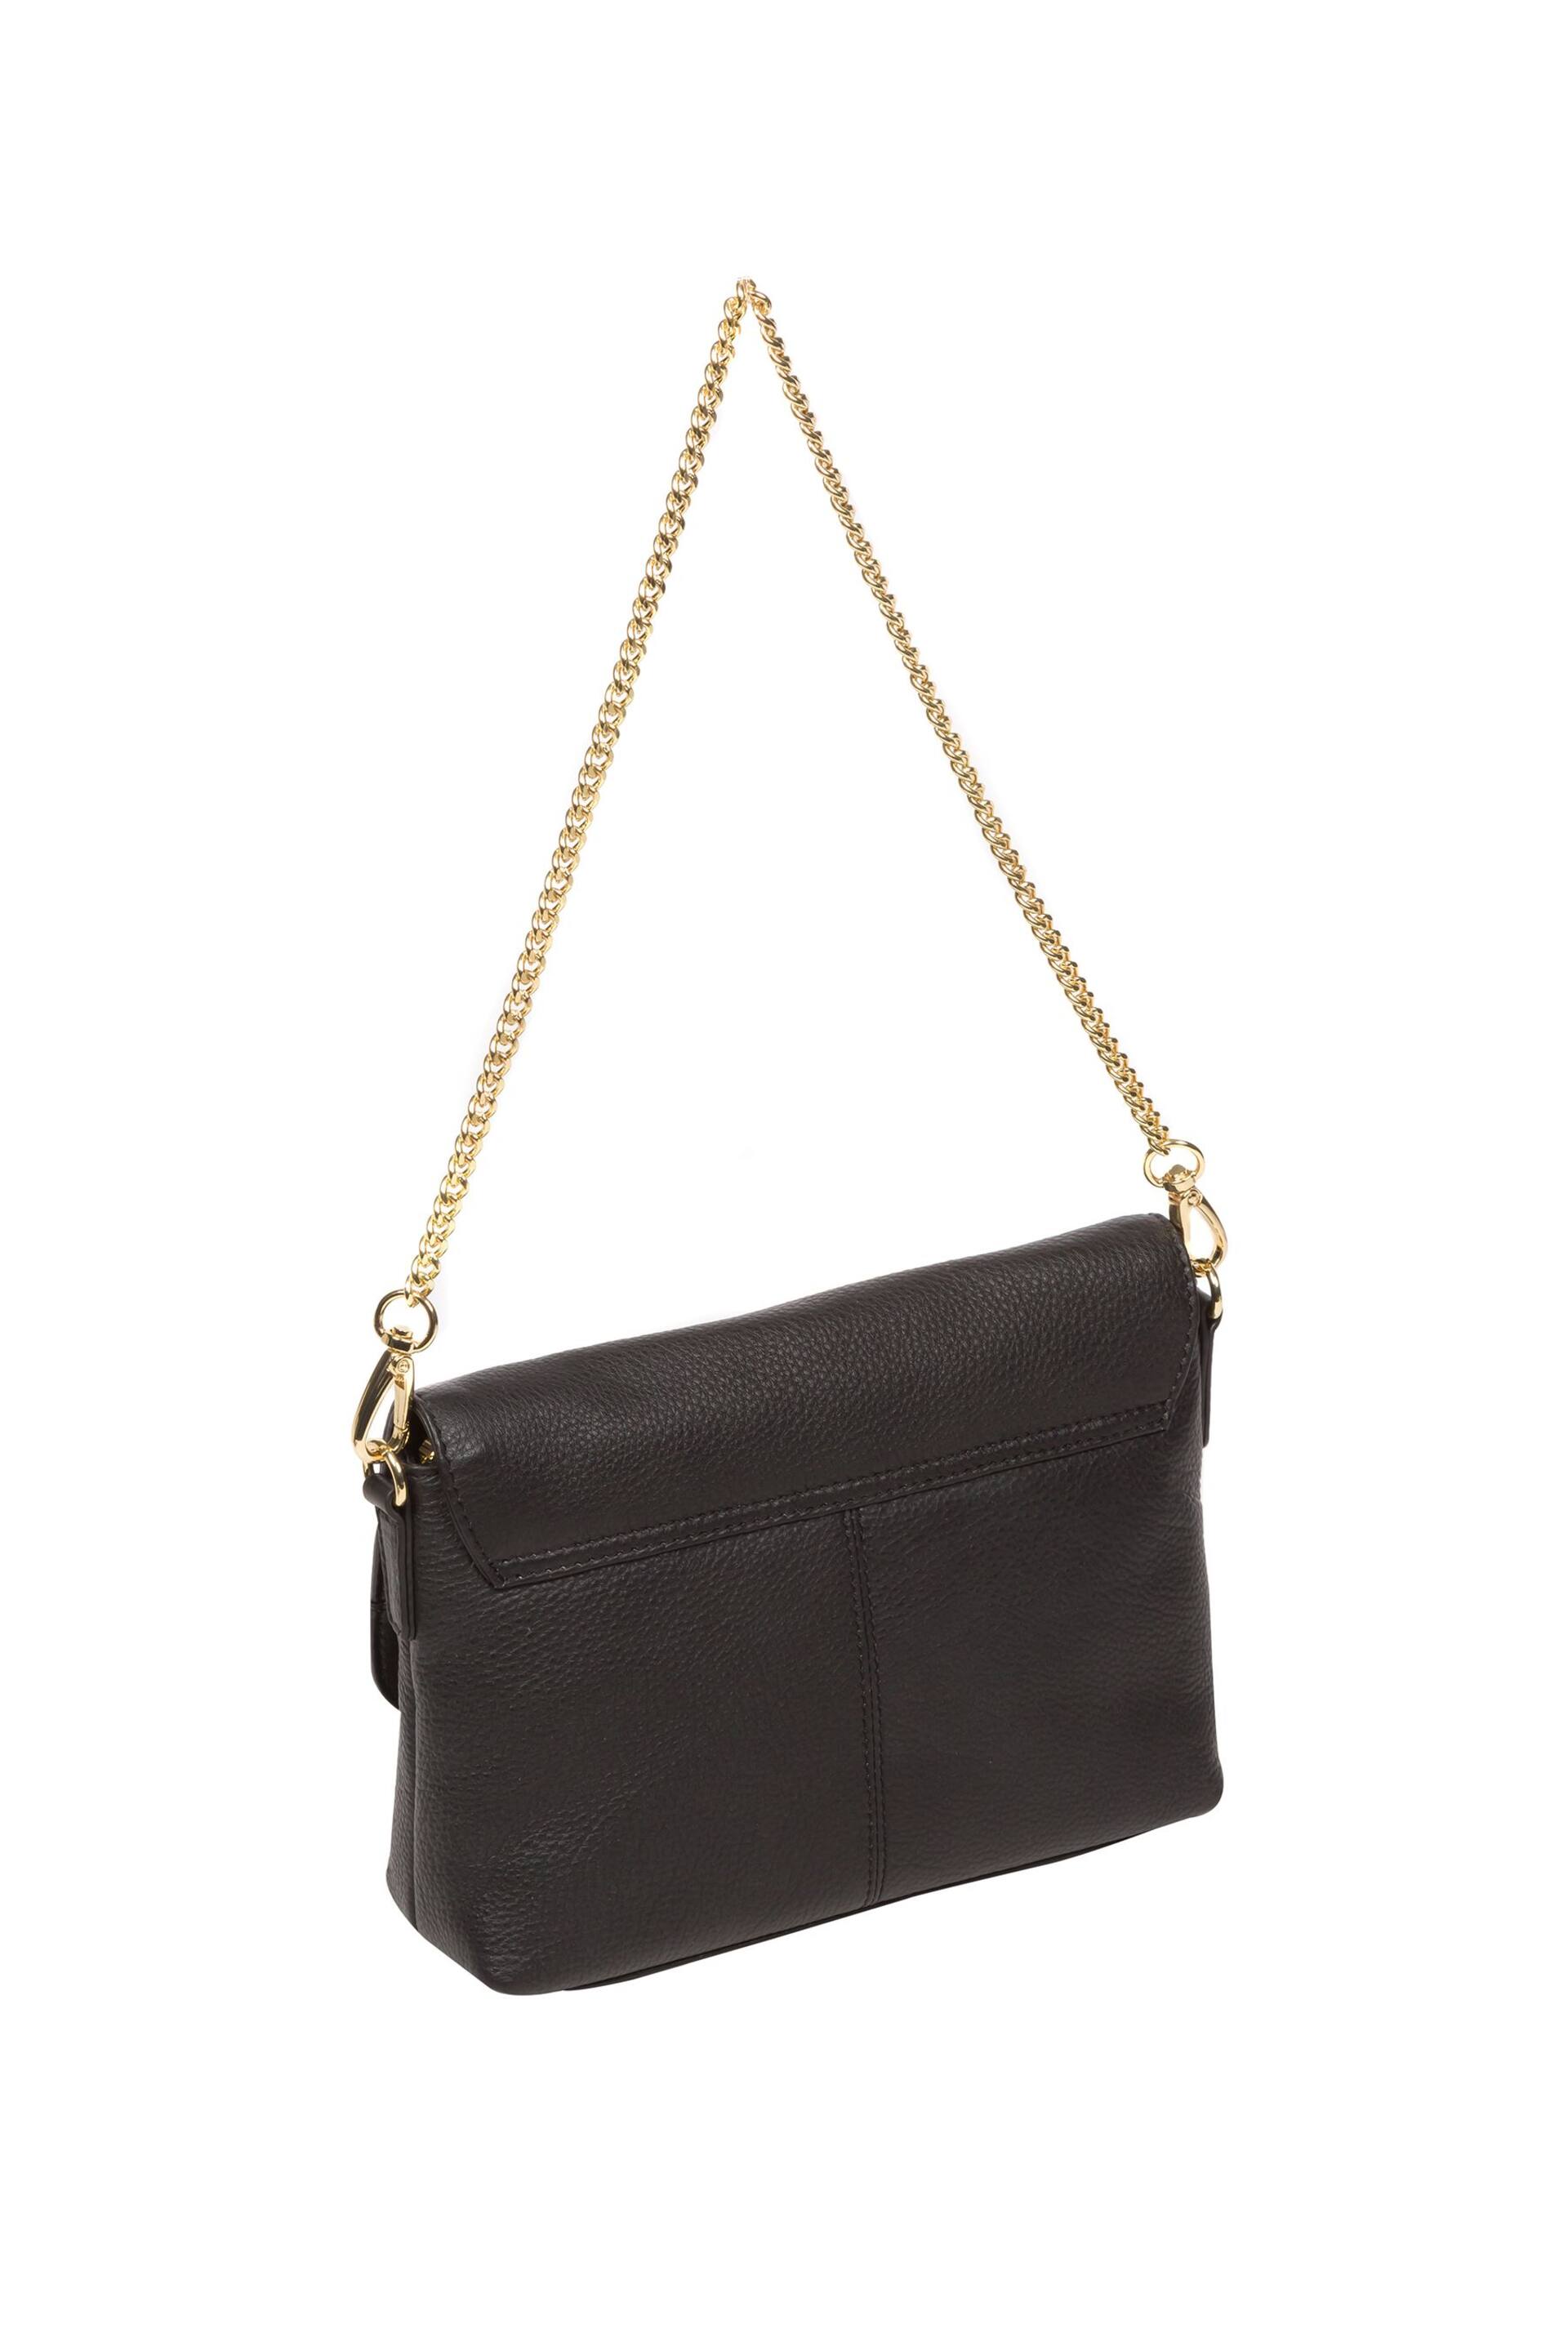 Pure Luxuries London Jazmine Nappa Leather Grab Clutch Bag - Image 3 of 8